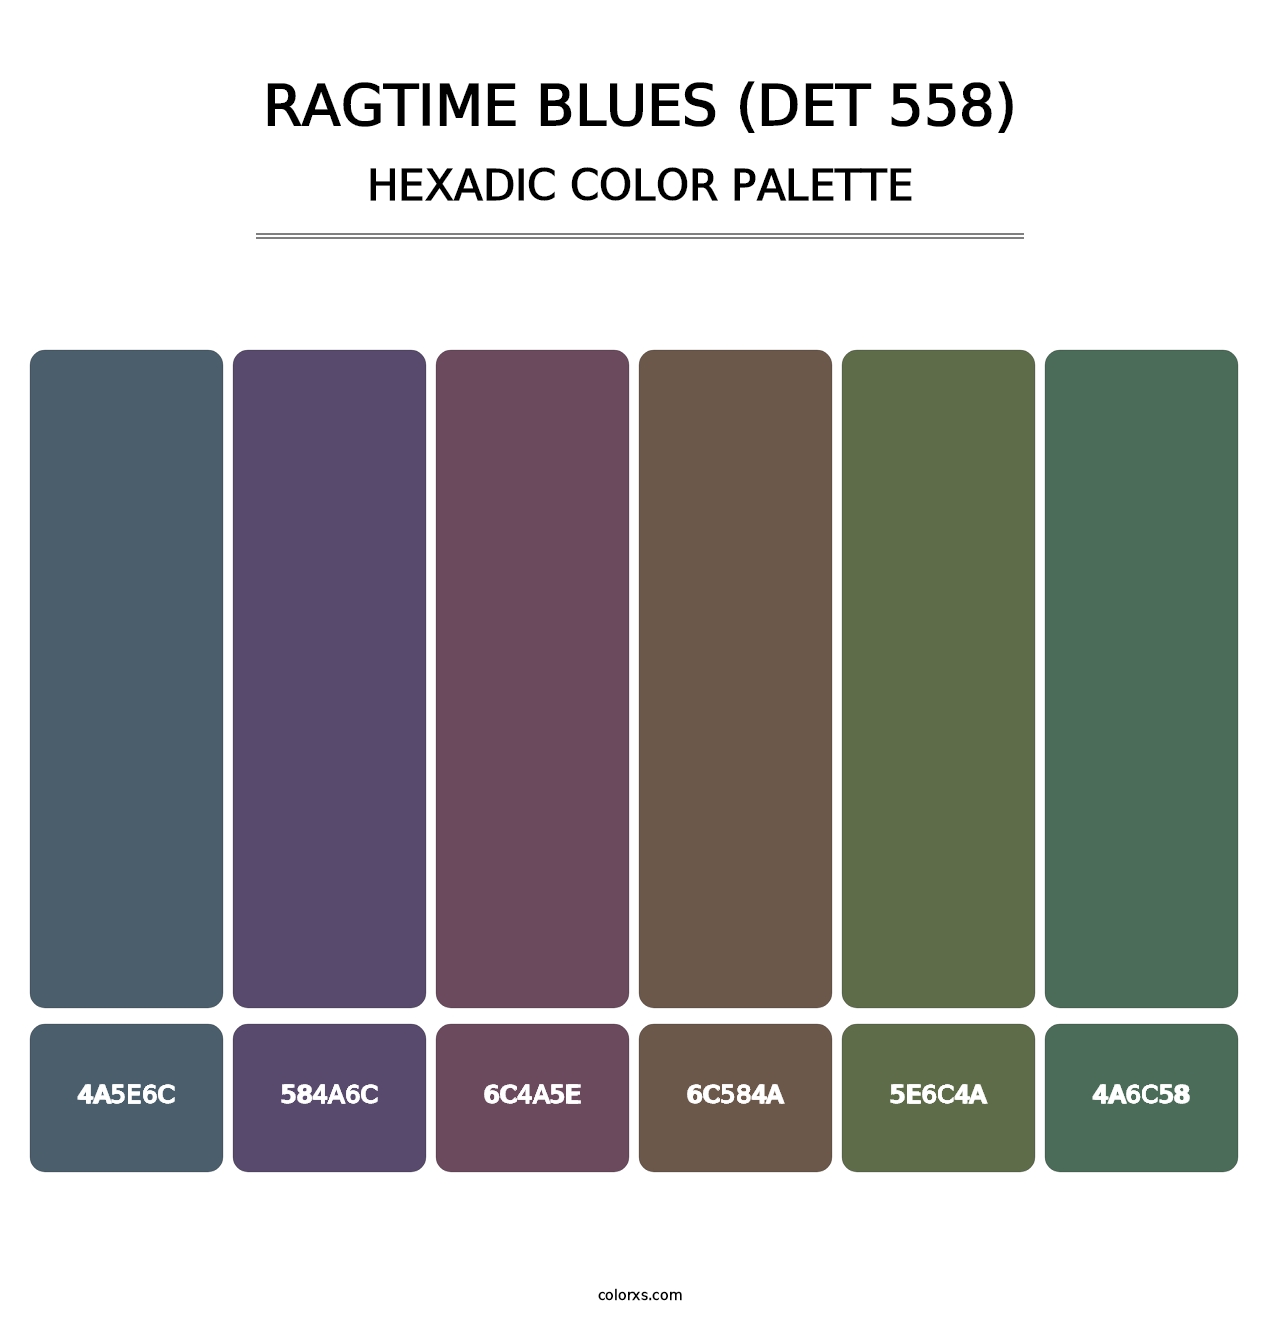 Ragtime Blues (DET 558) - Hexadic Color Palette